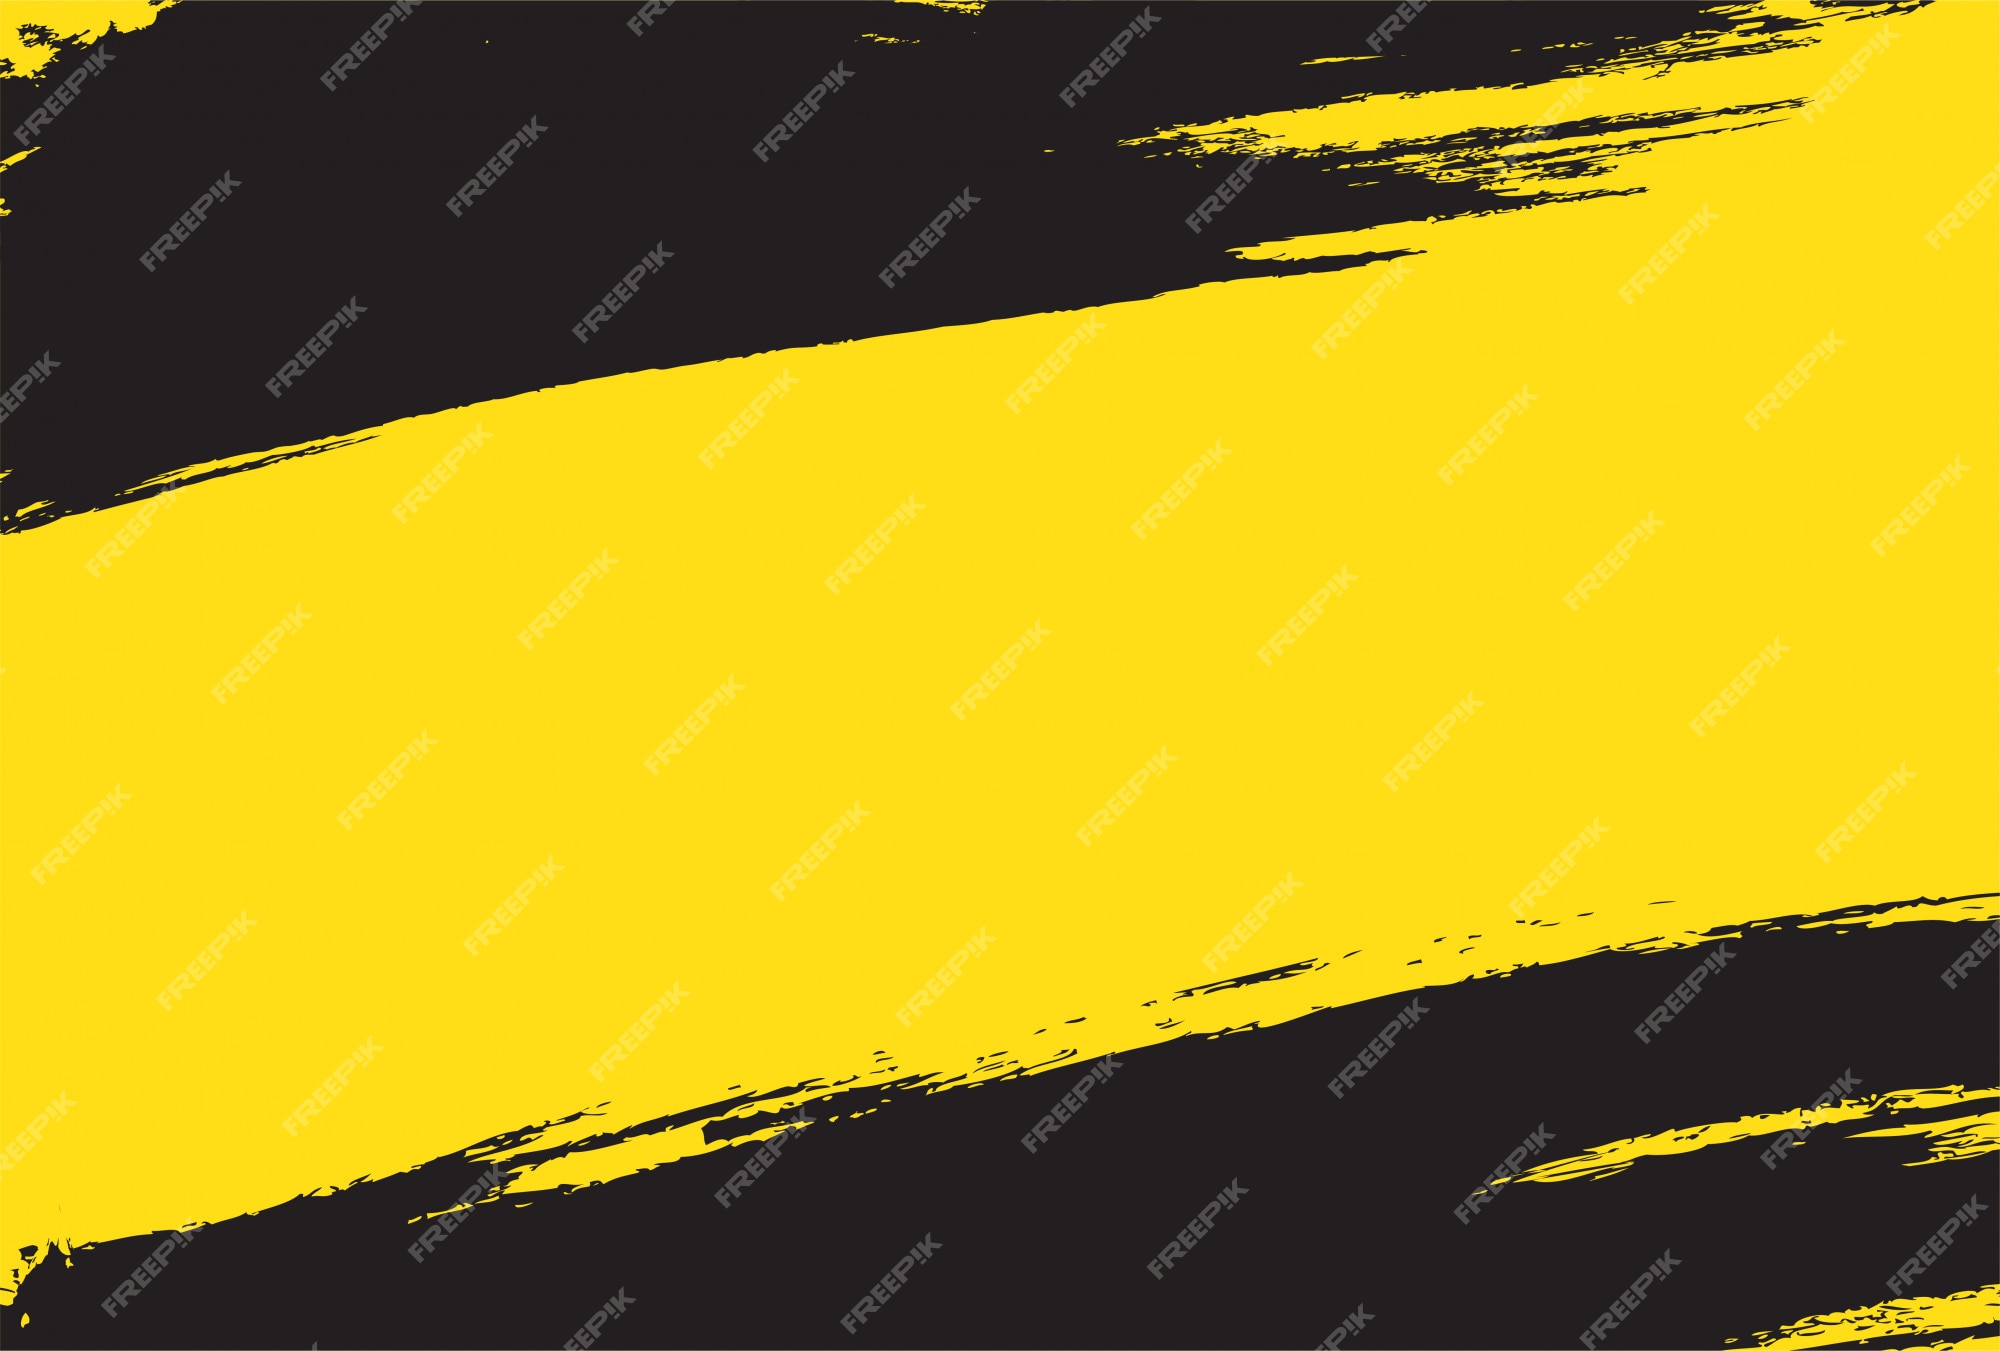 Premium Vector | Paint brush strokes on yellow background.